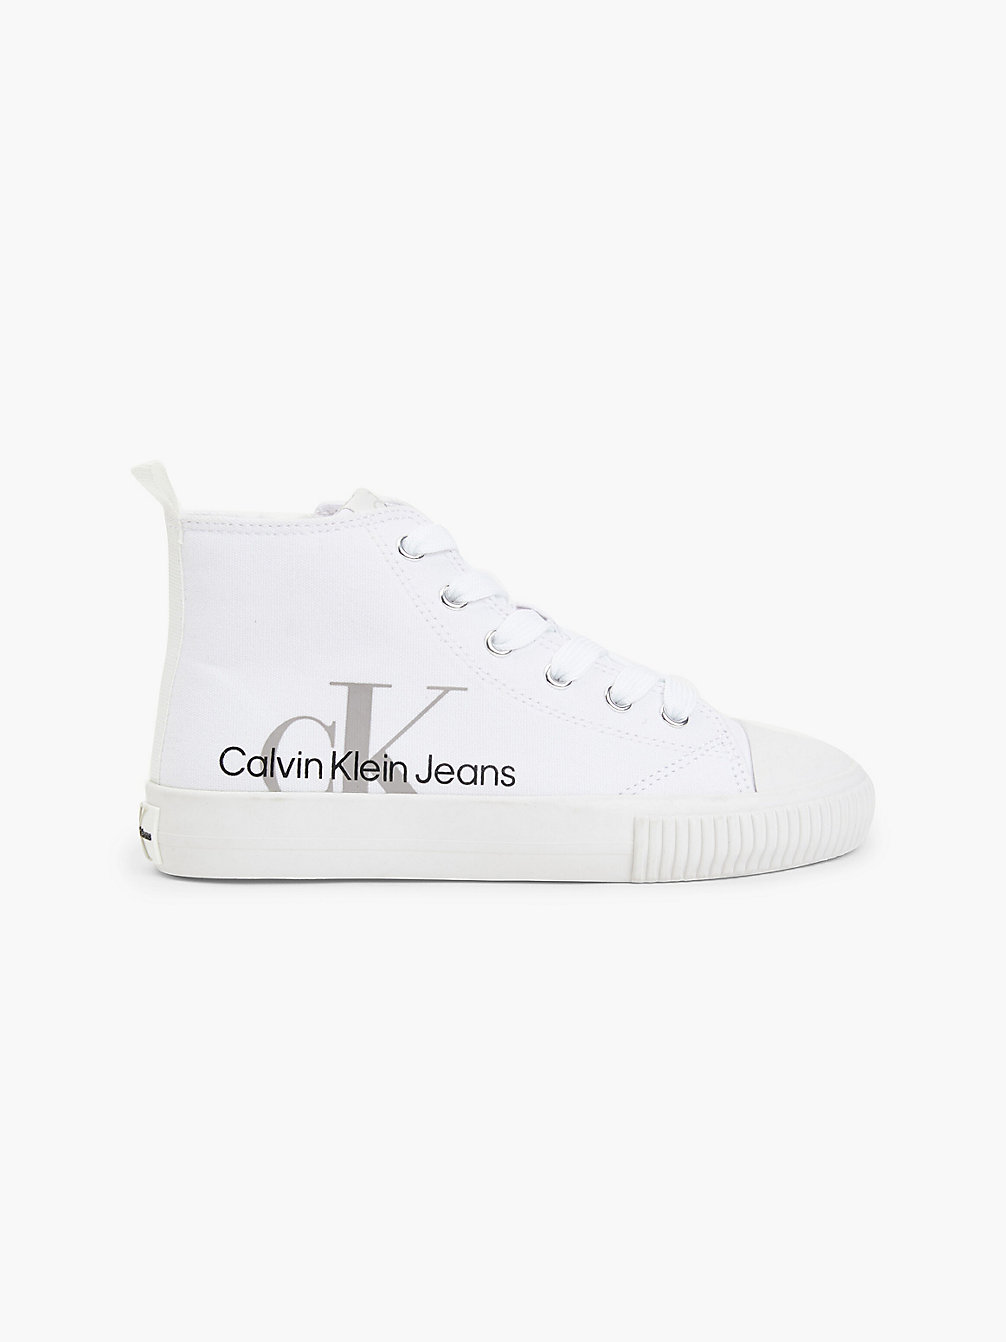 WHITE > Recycelte High Top Sneakers Aus Canvas > undefined kids unisex - Calvin Klein